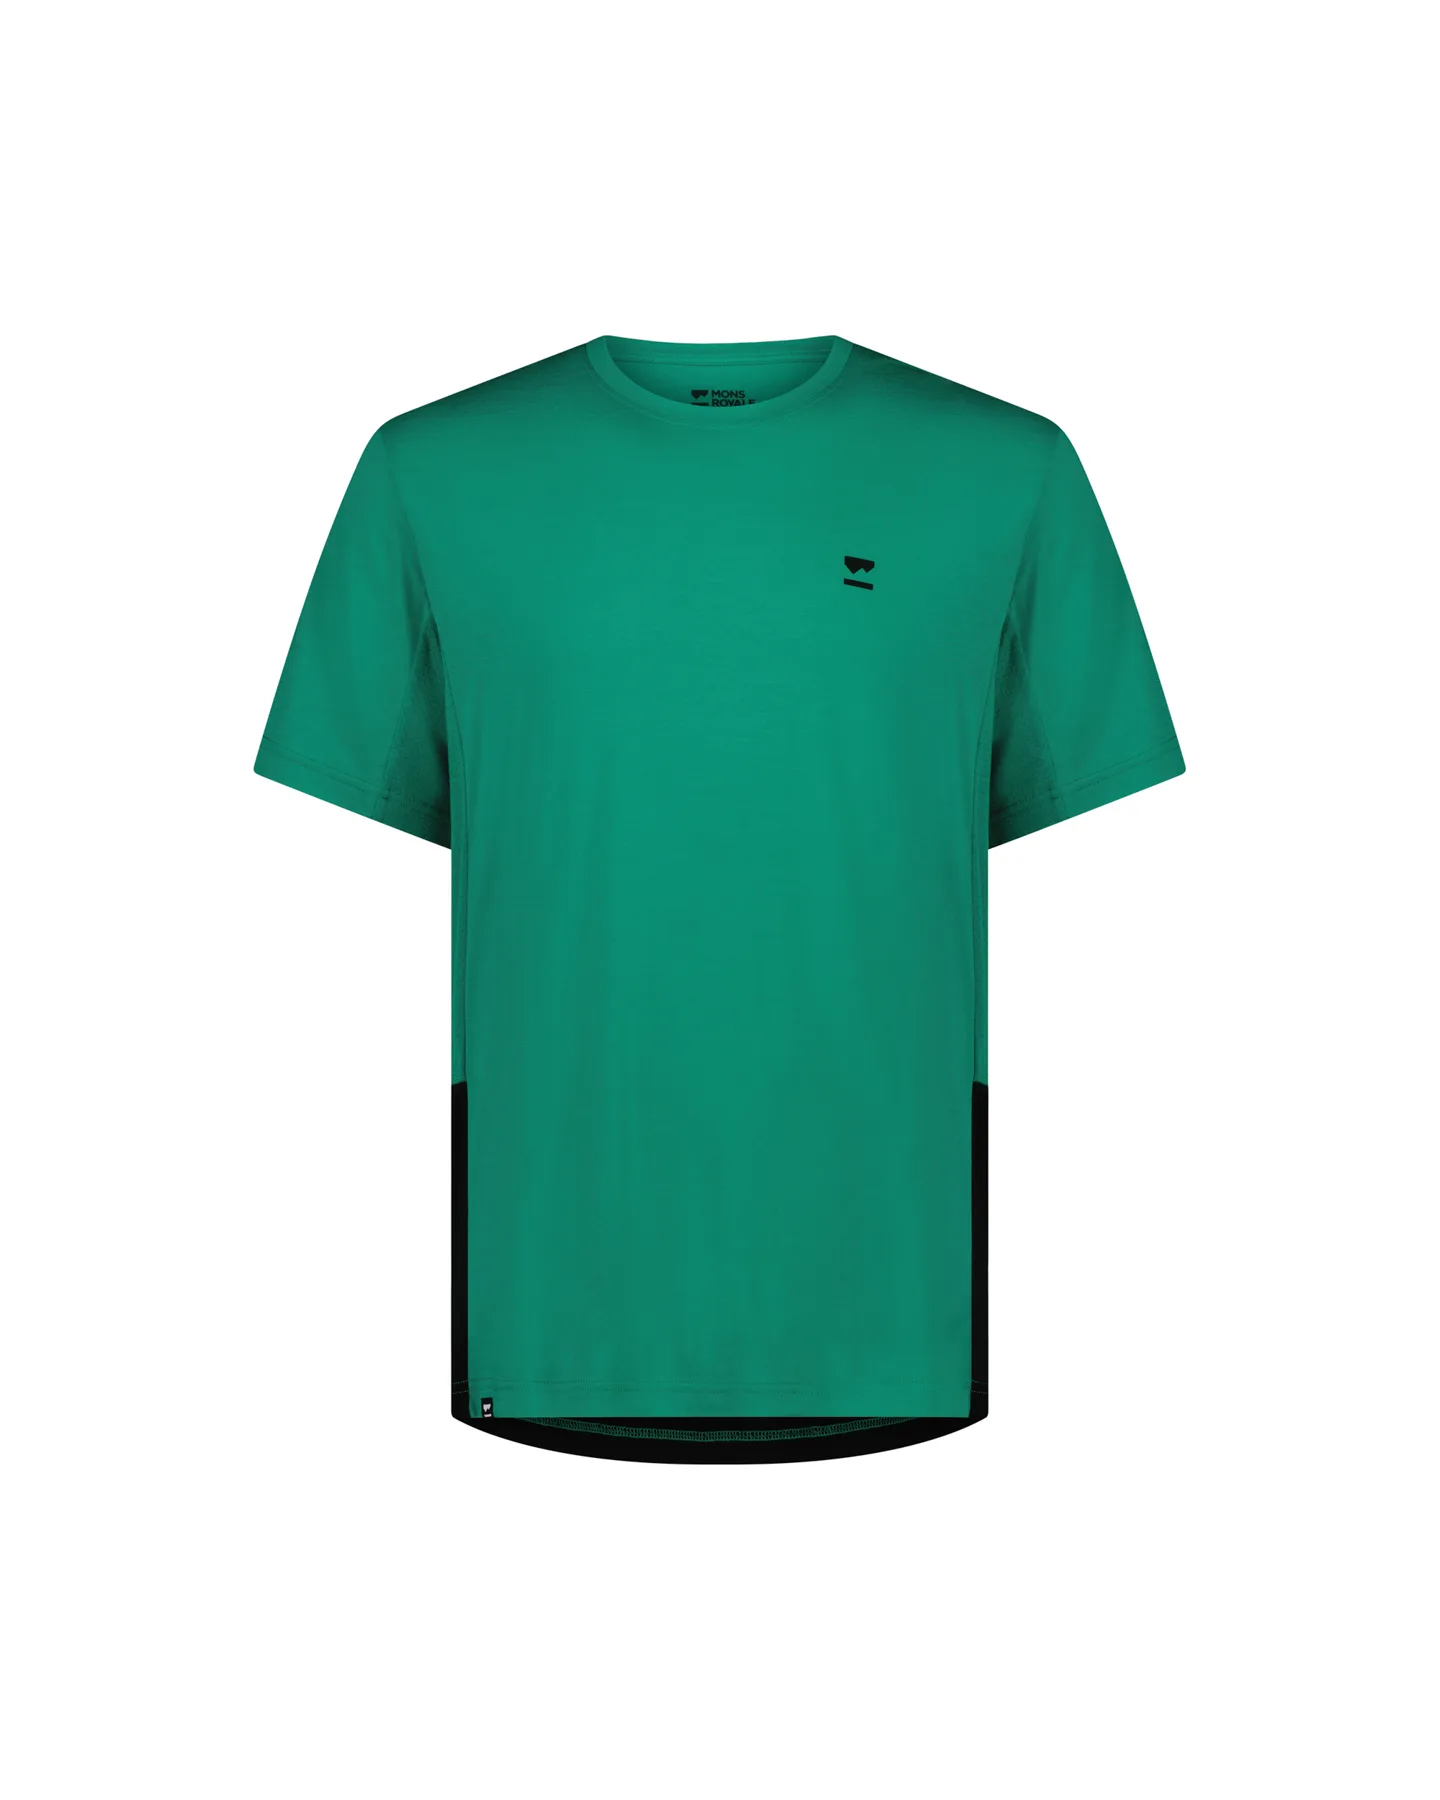 Mons Royale - Tarn Merino Shift T-Shirt - Pop Green / Black - Grøn, Sort XXL